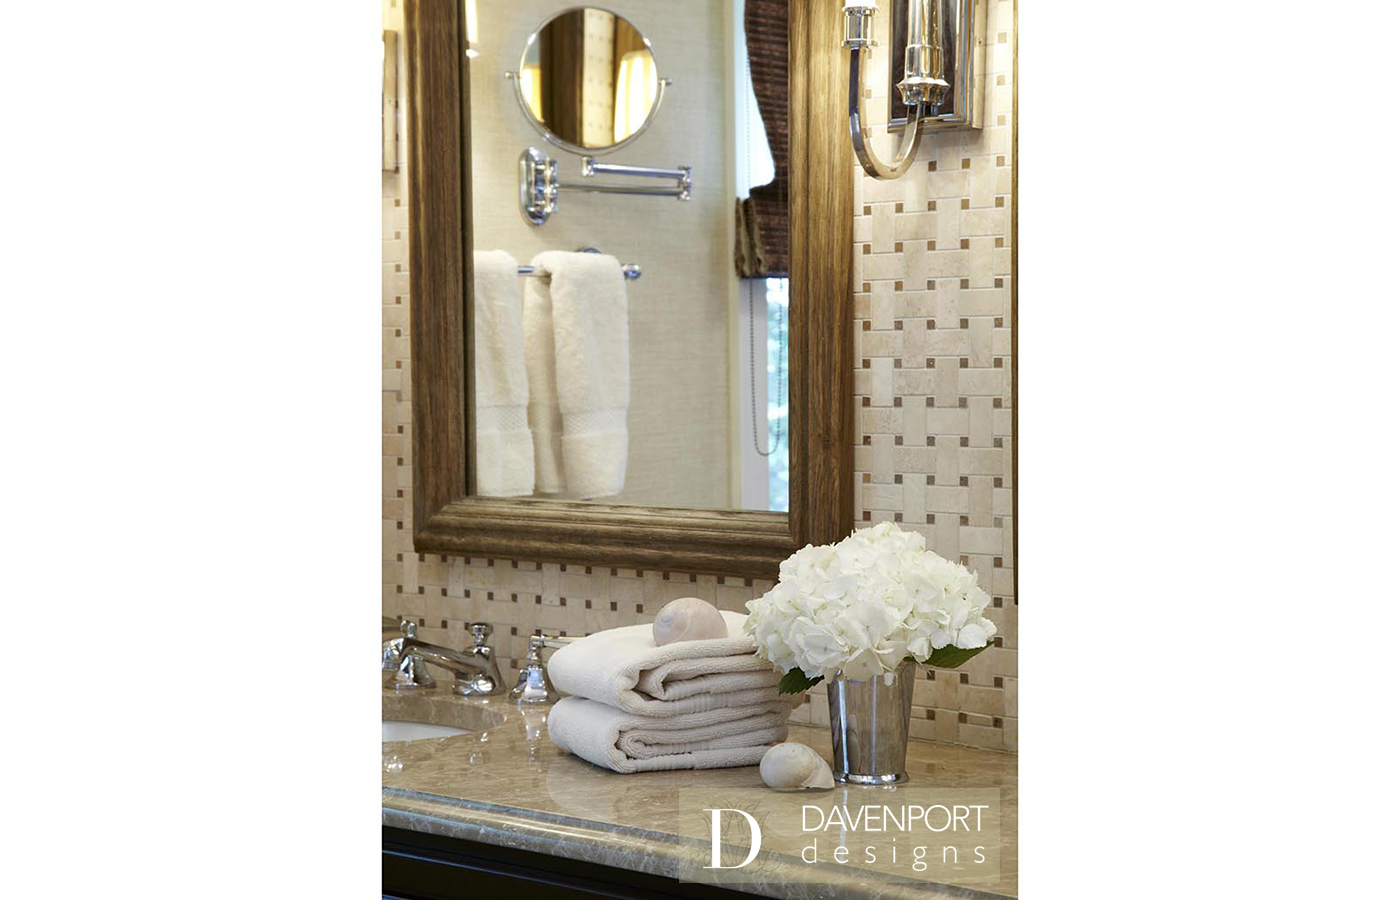 Davenport2012_Bathroom2.jpg